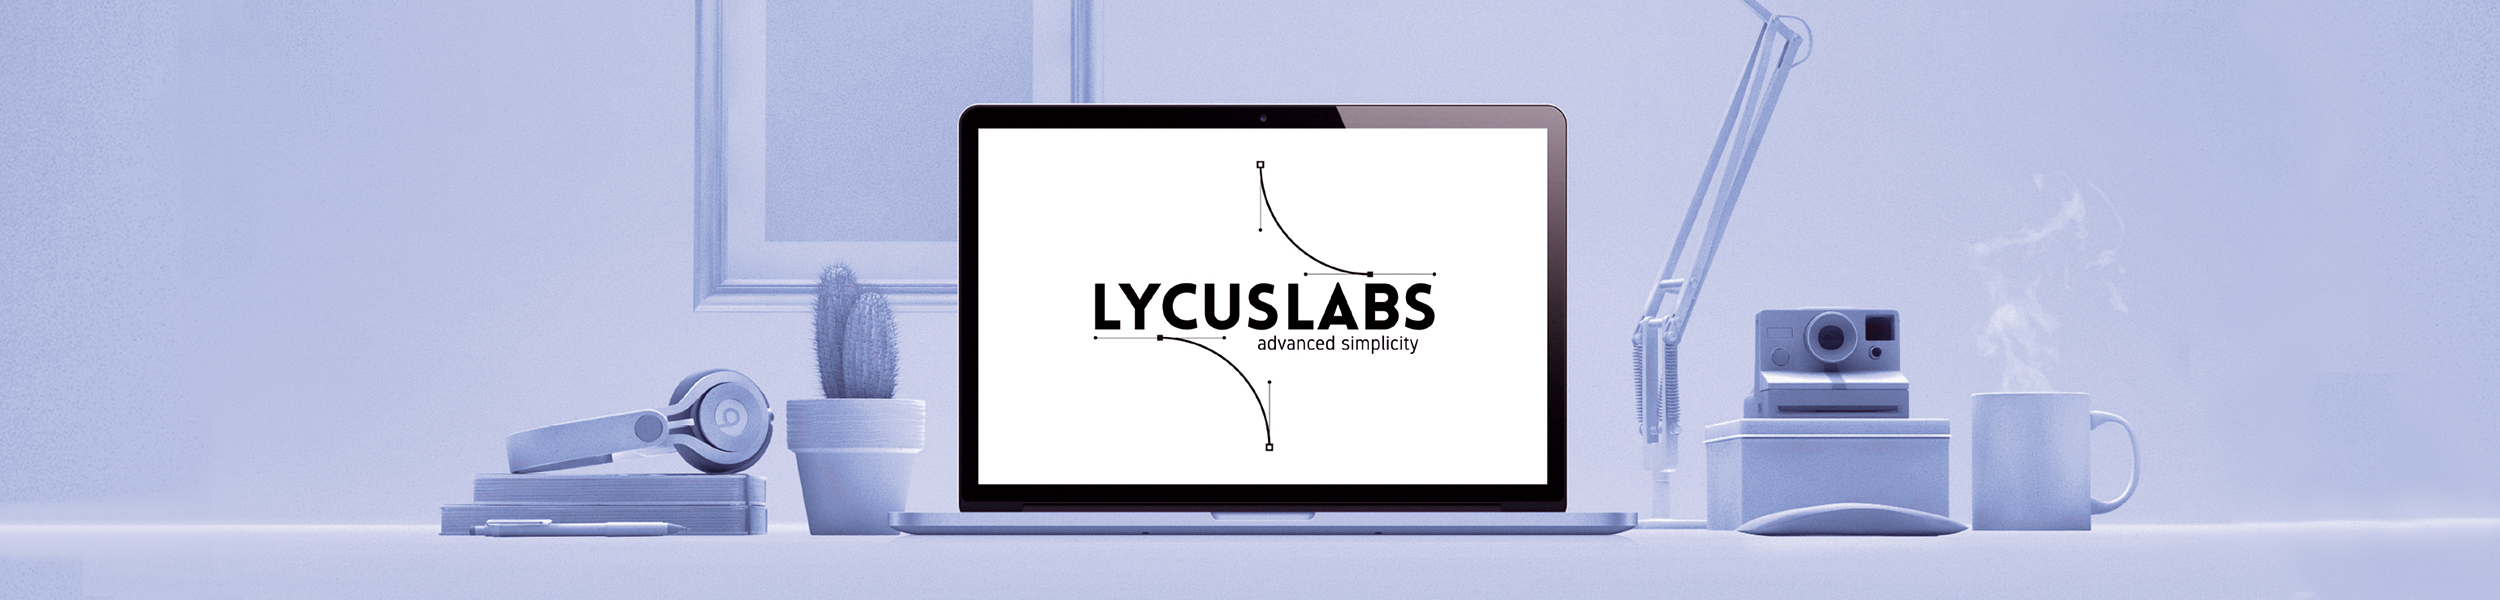 lycuslabs slider3